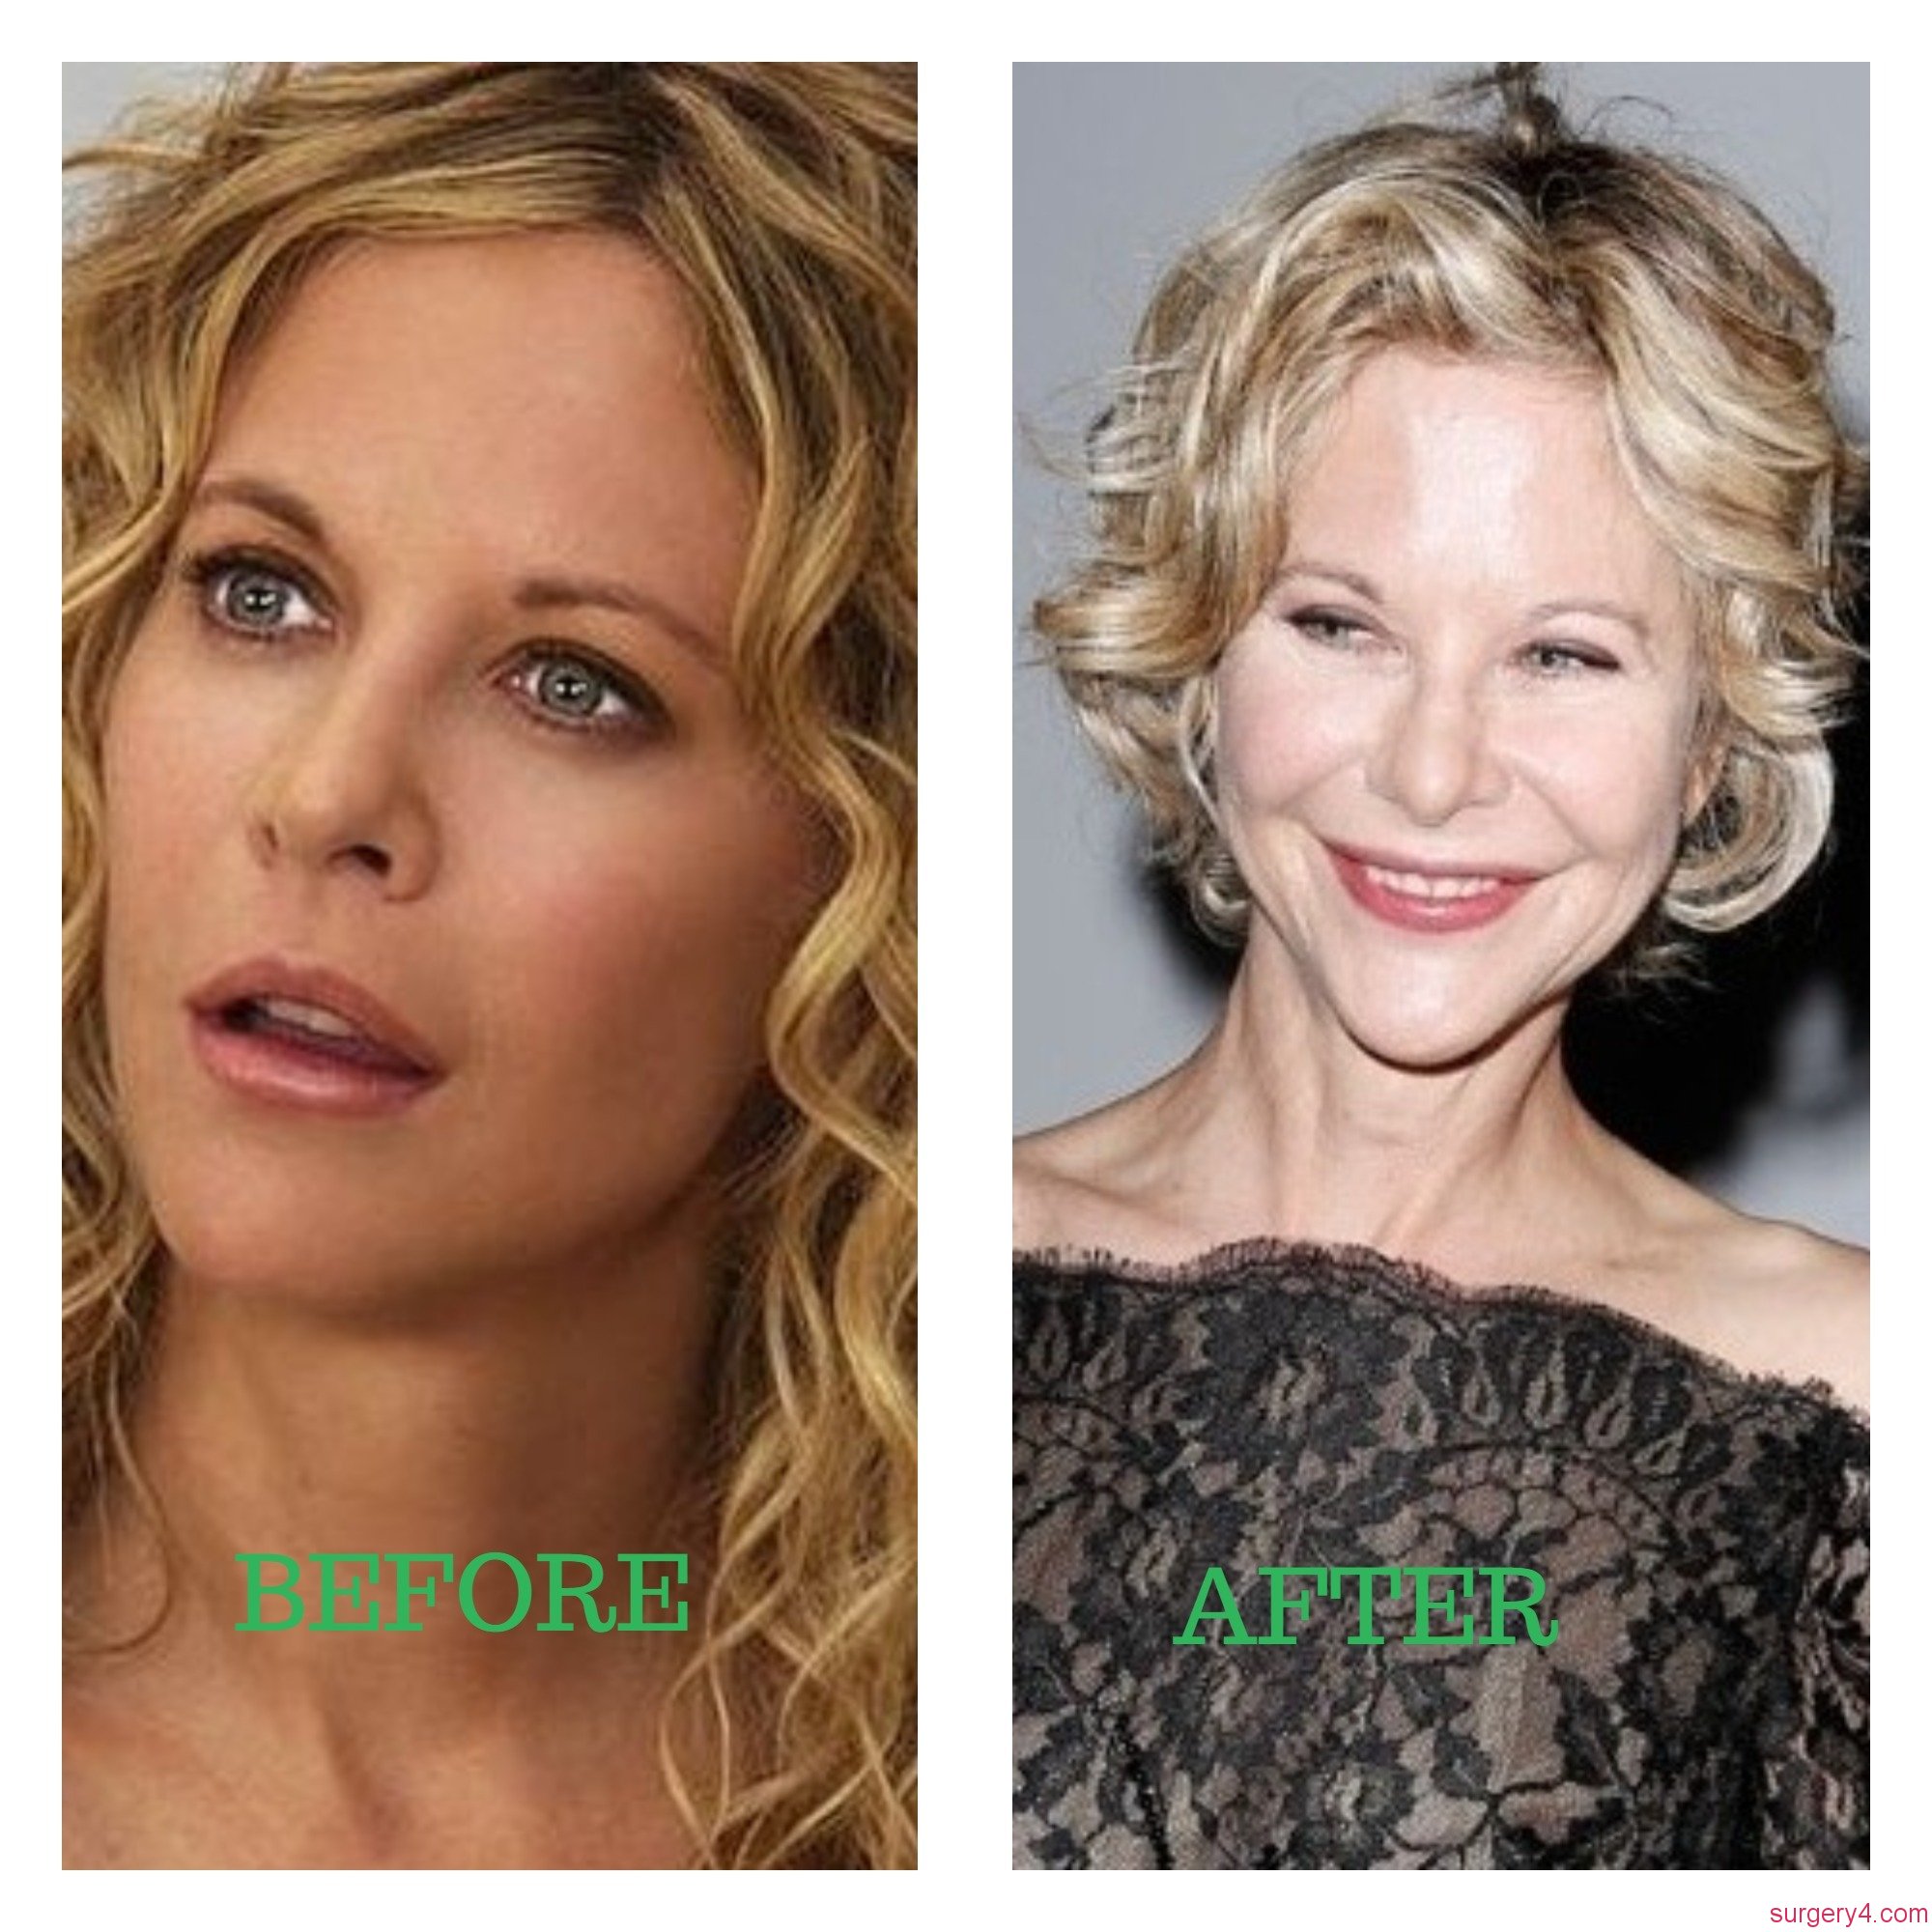 Meg Ryan Plastic Surgery Photos [Before & After] ⋆ Surgery4